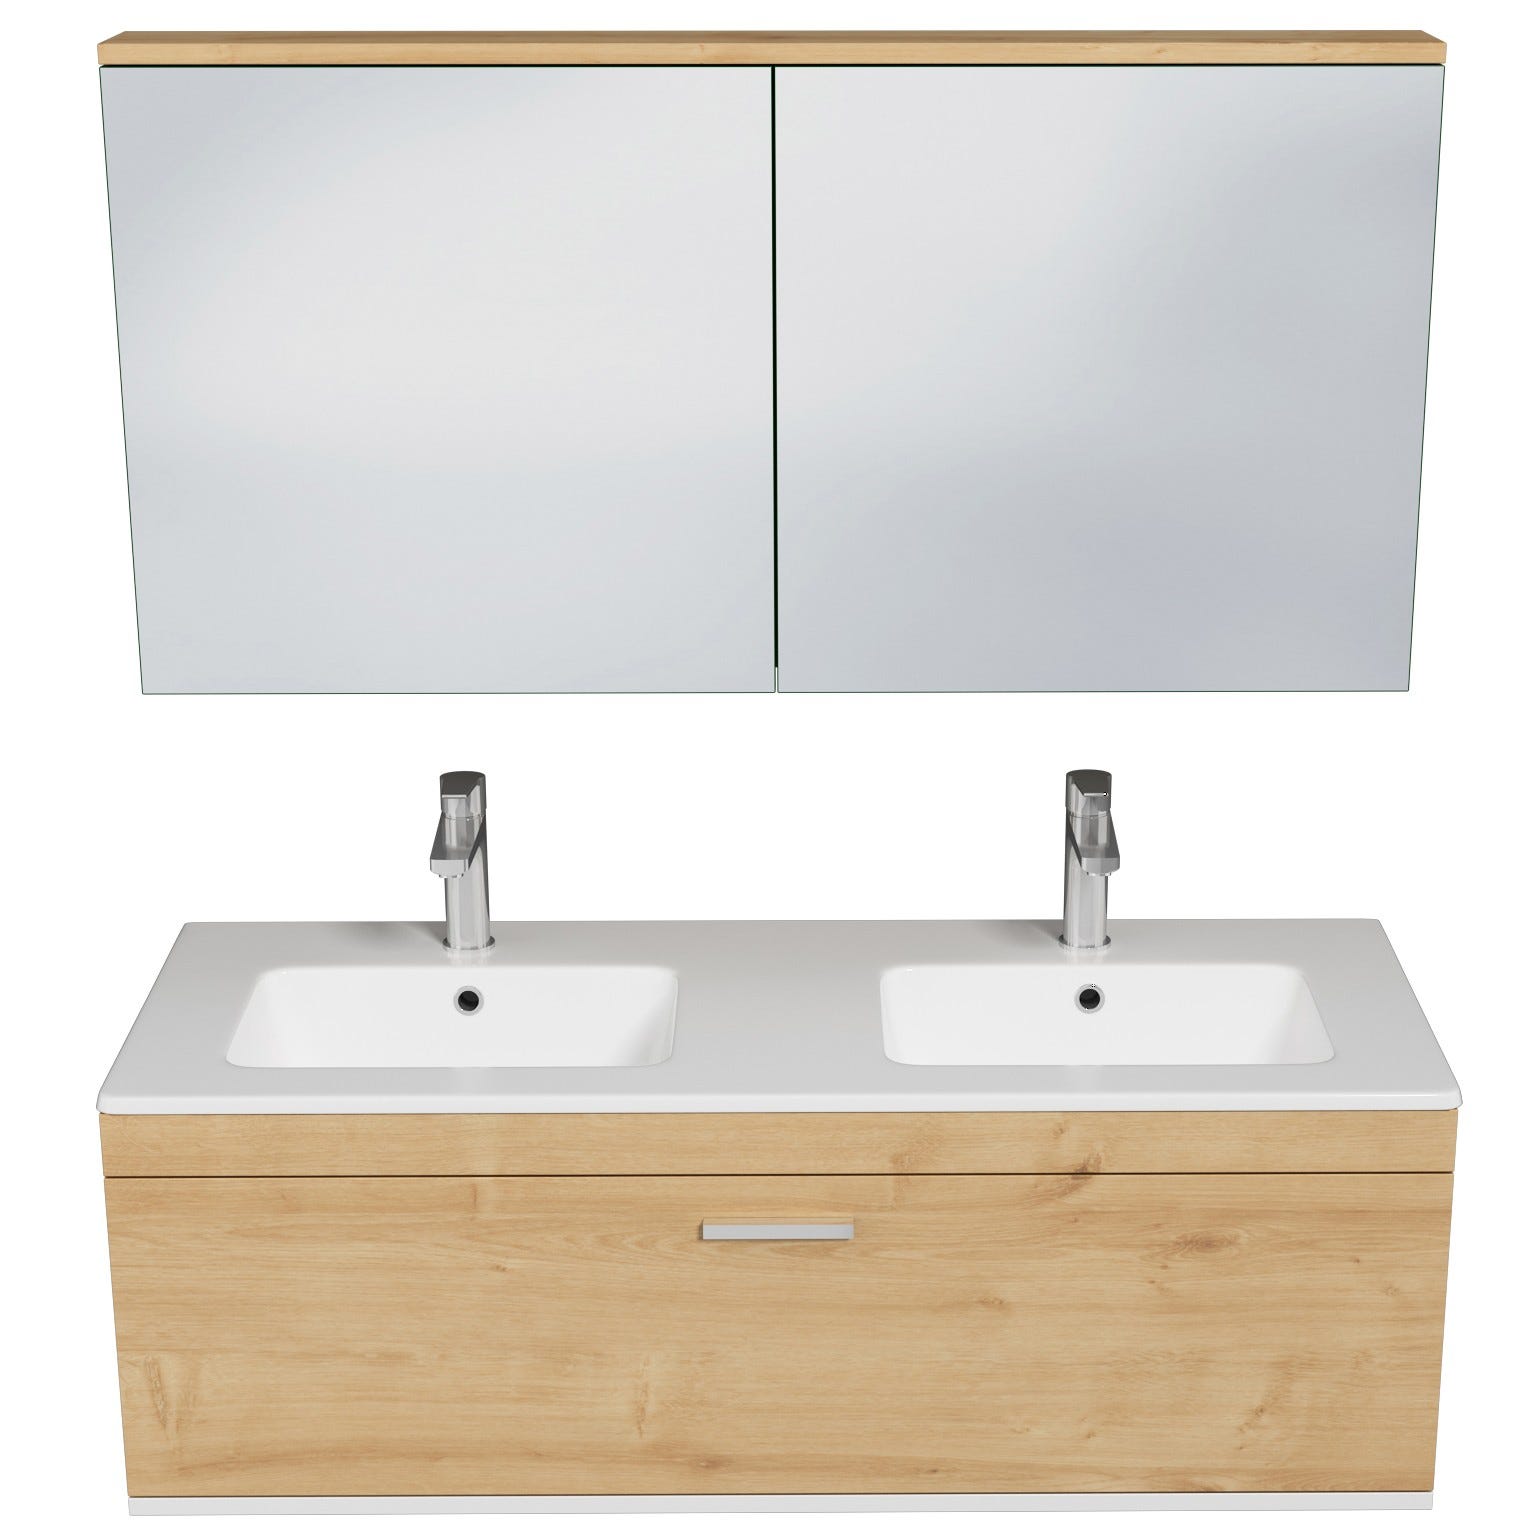 RUBITE Meuble salle de bain double vasque 1 tiroir chêne clair largeur 120 cm + miroir armoire 3